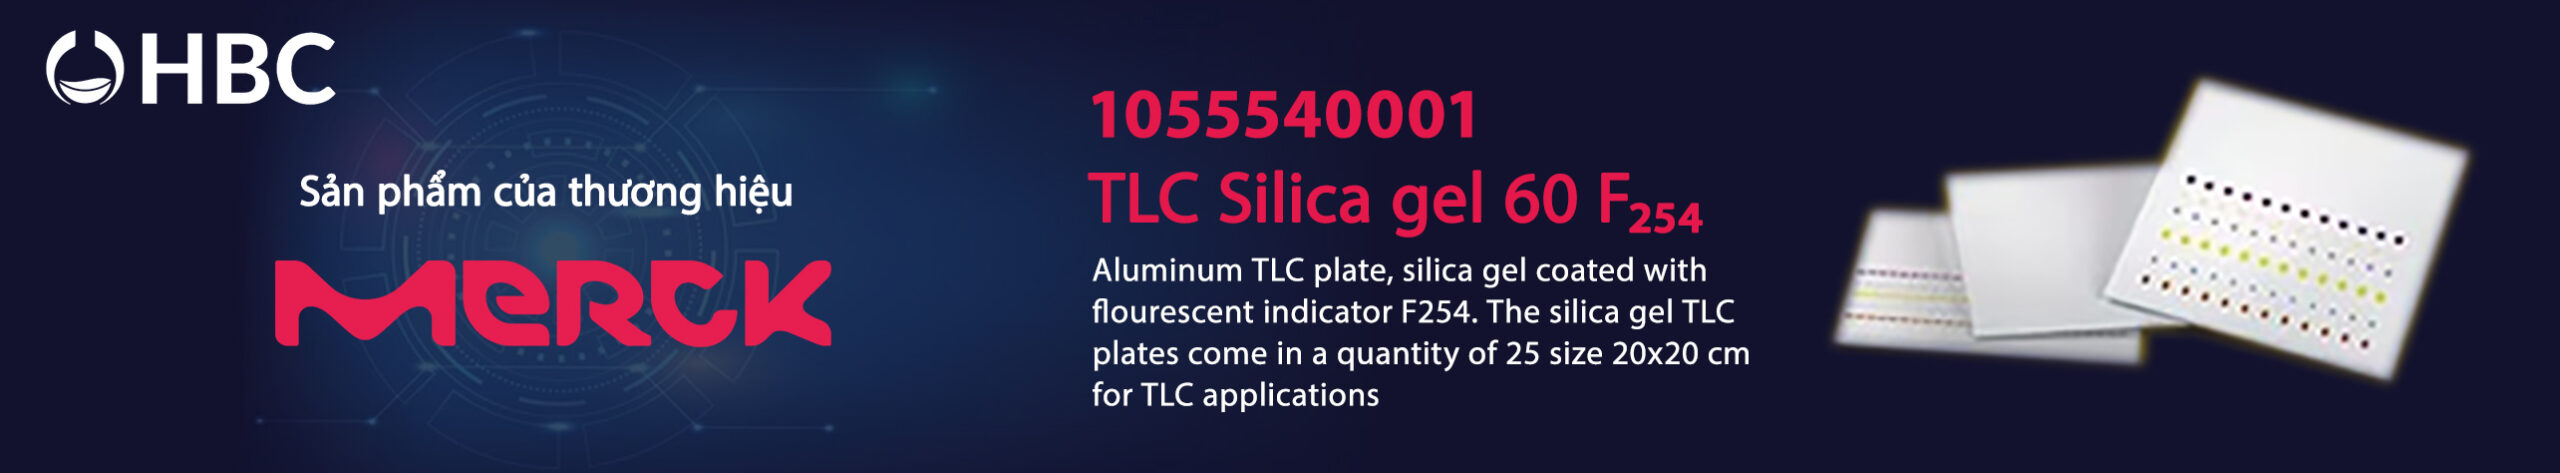 TLC-Silica-gel-Merck